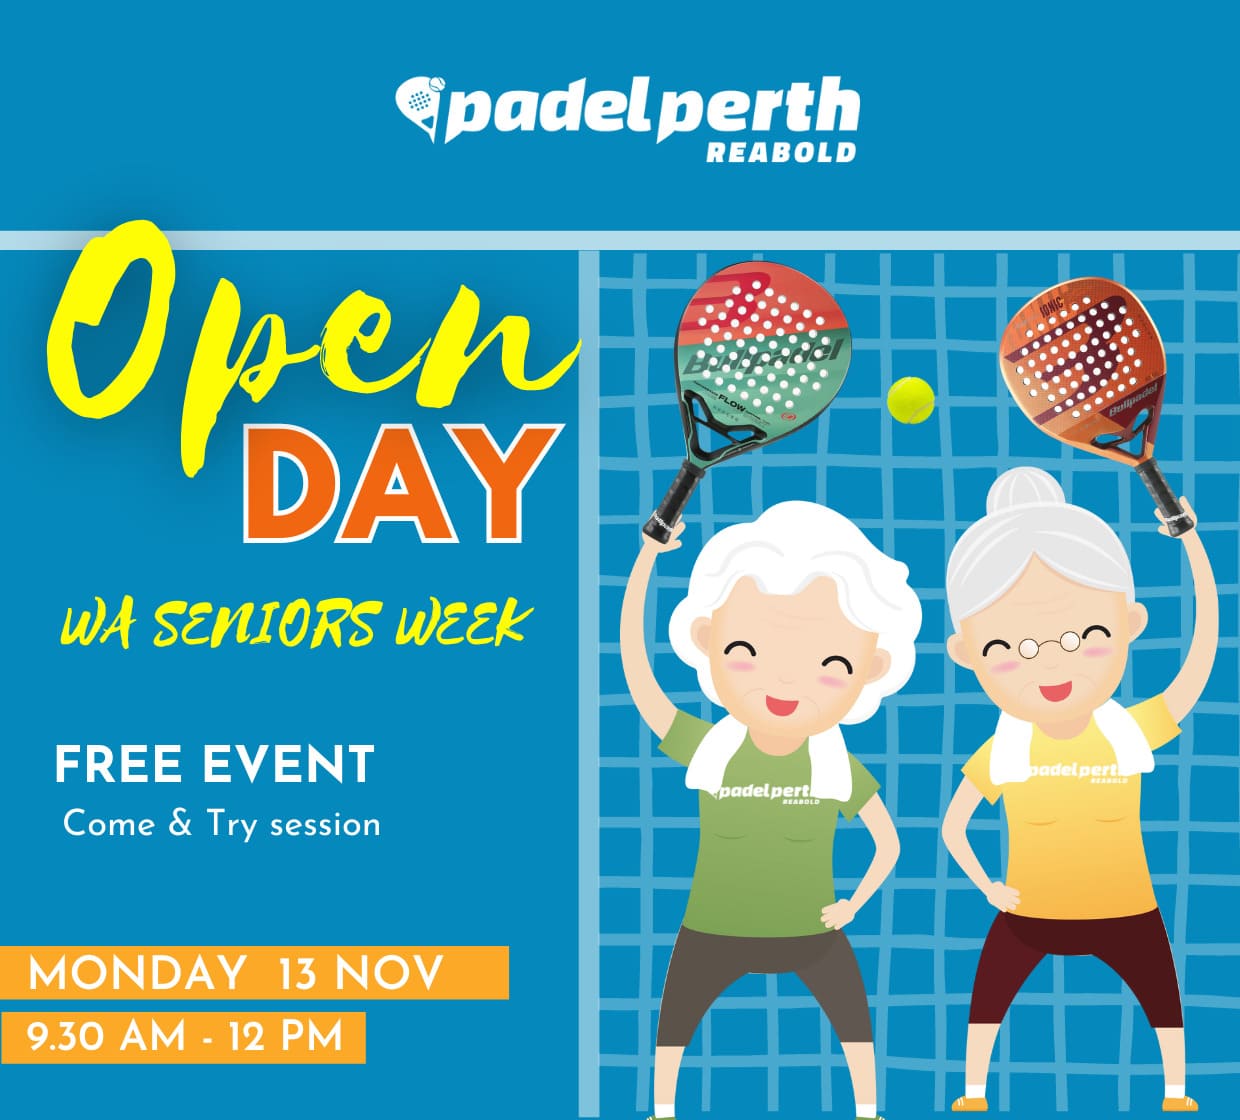 Padel Perth Open Day